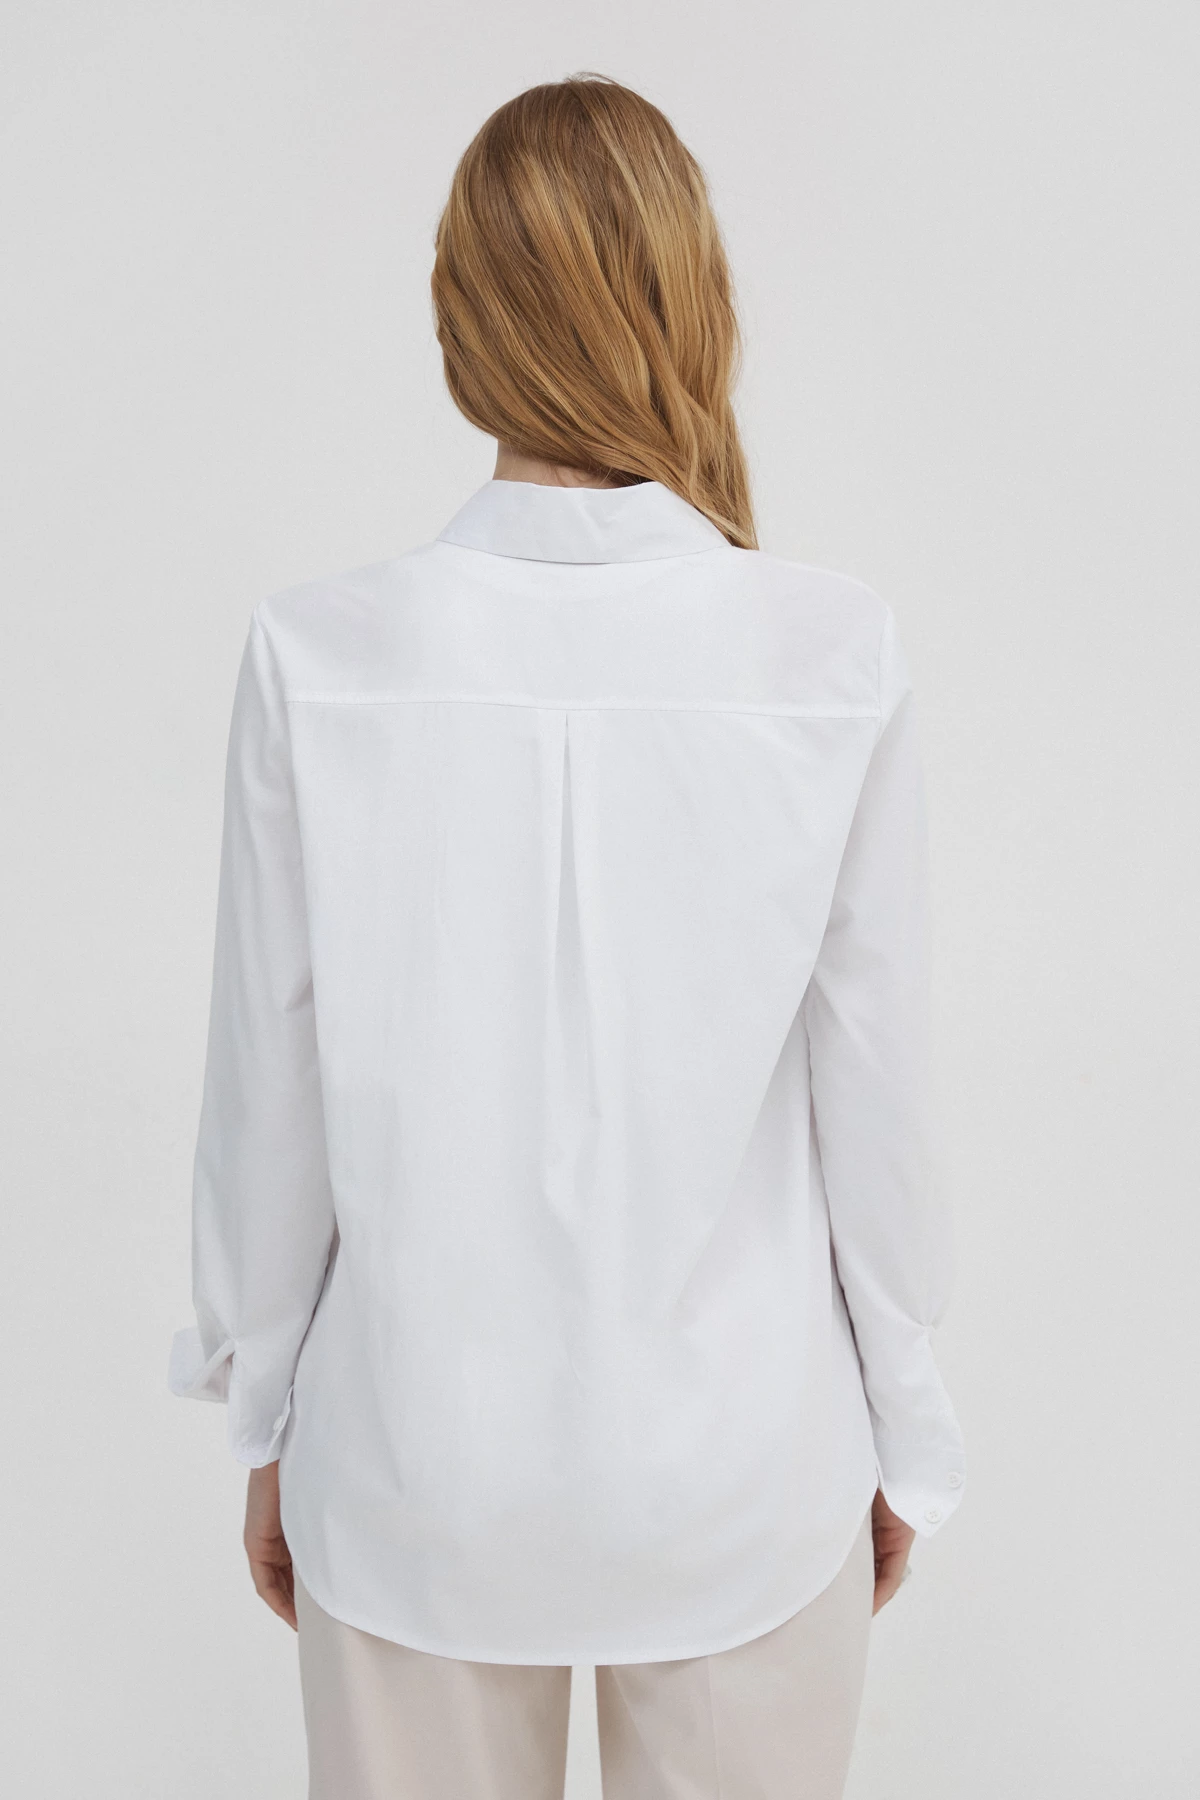 White free cut shirt with cotton, photo 4